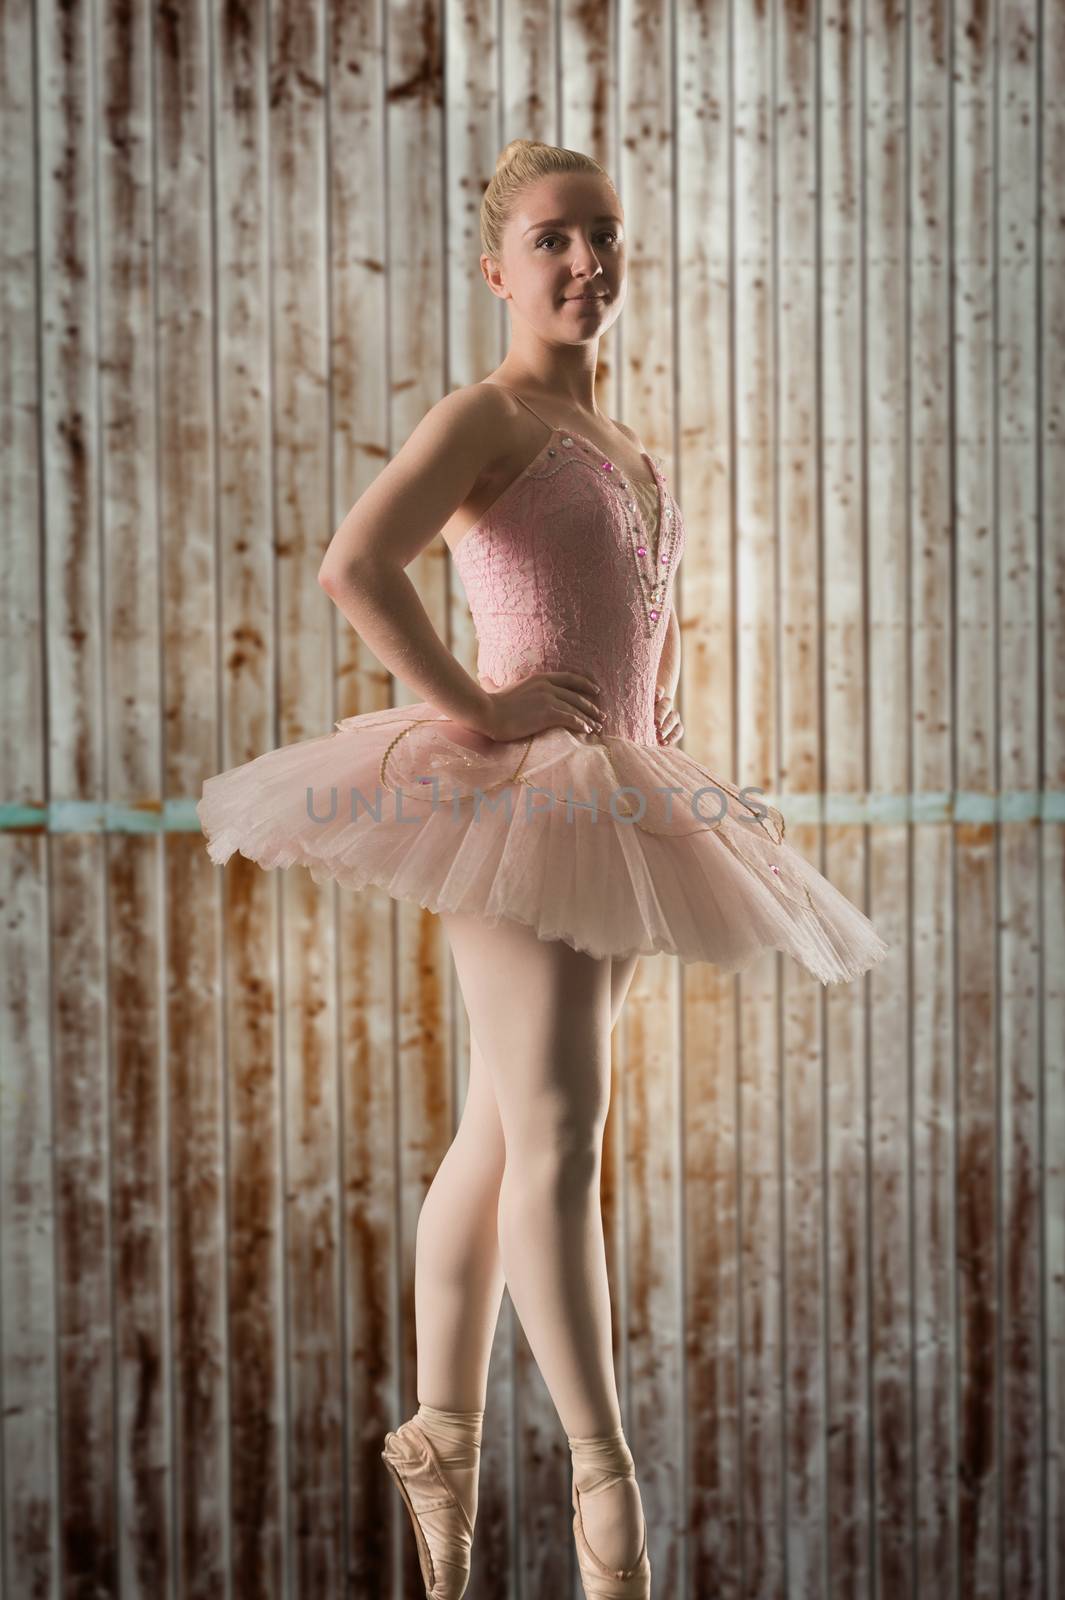 Composite image of pretty ballerina dancing by Wavebreakmedia